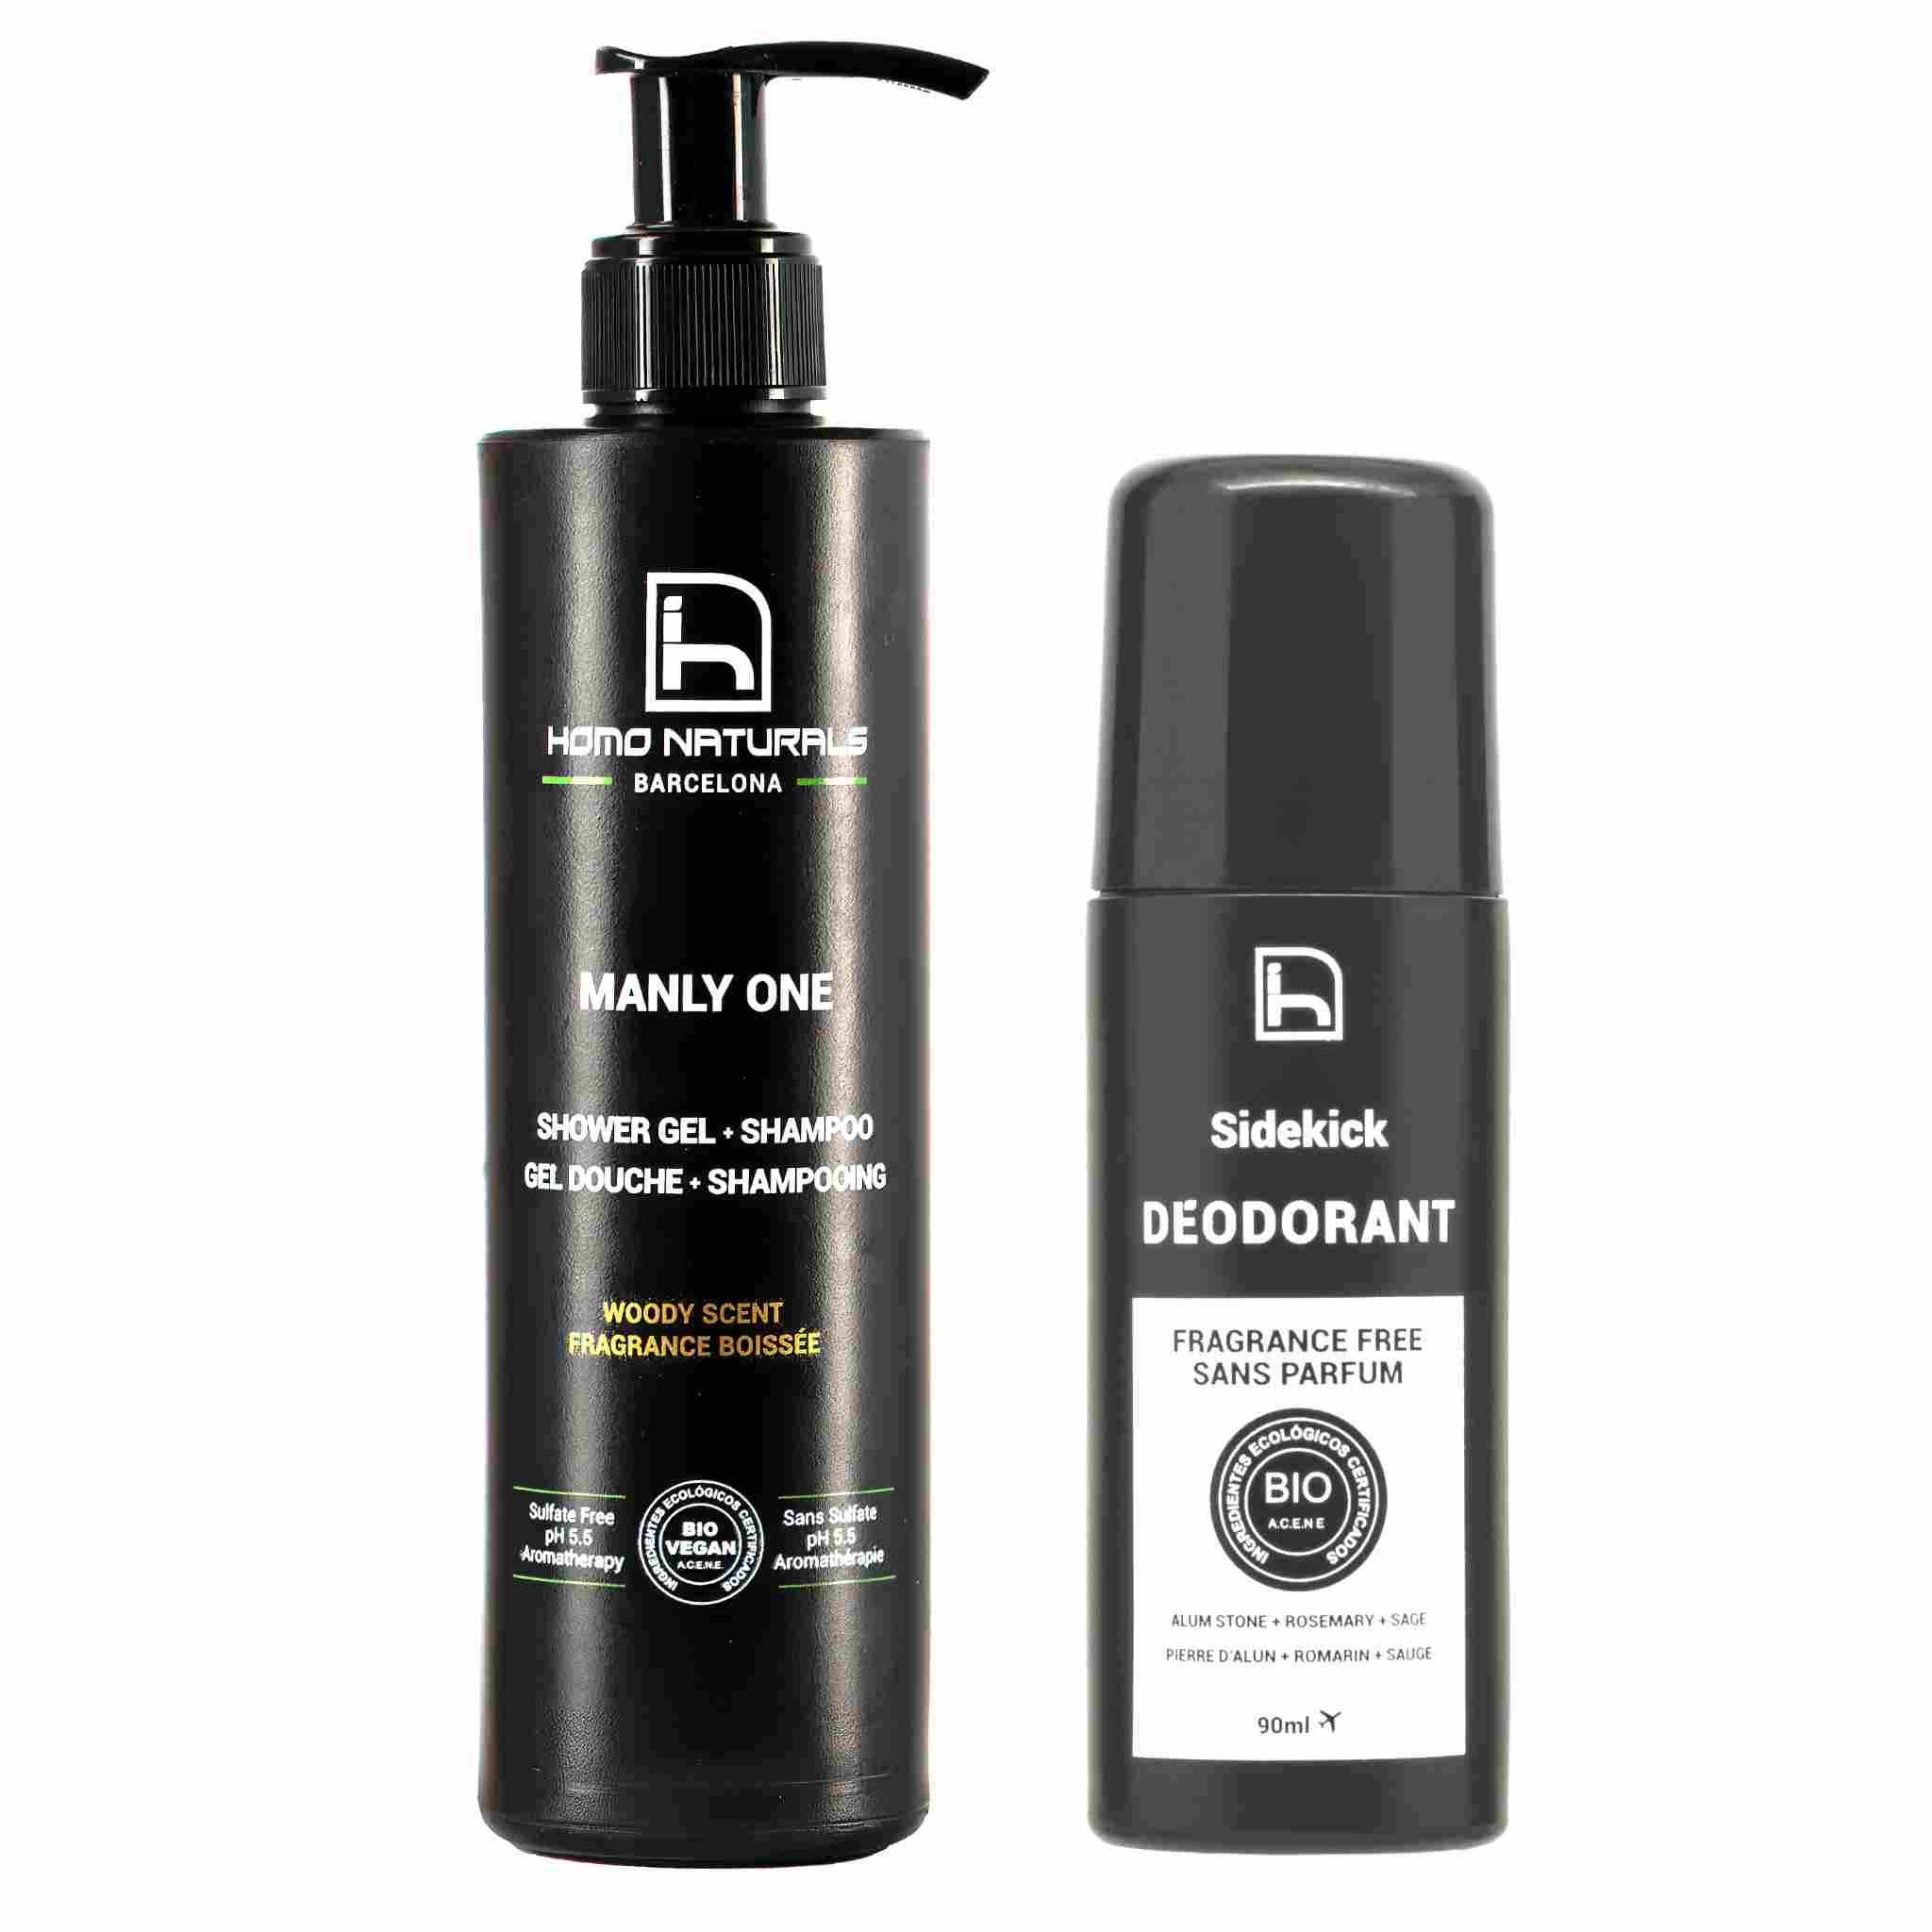 Fragrance-free deodorant and natural shower gel for men